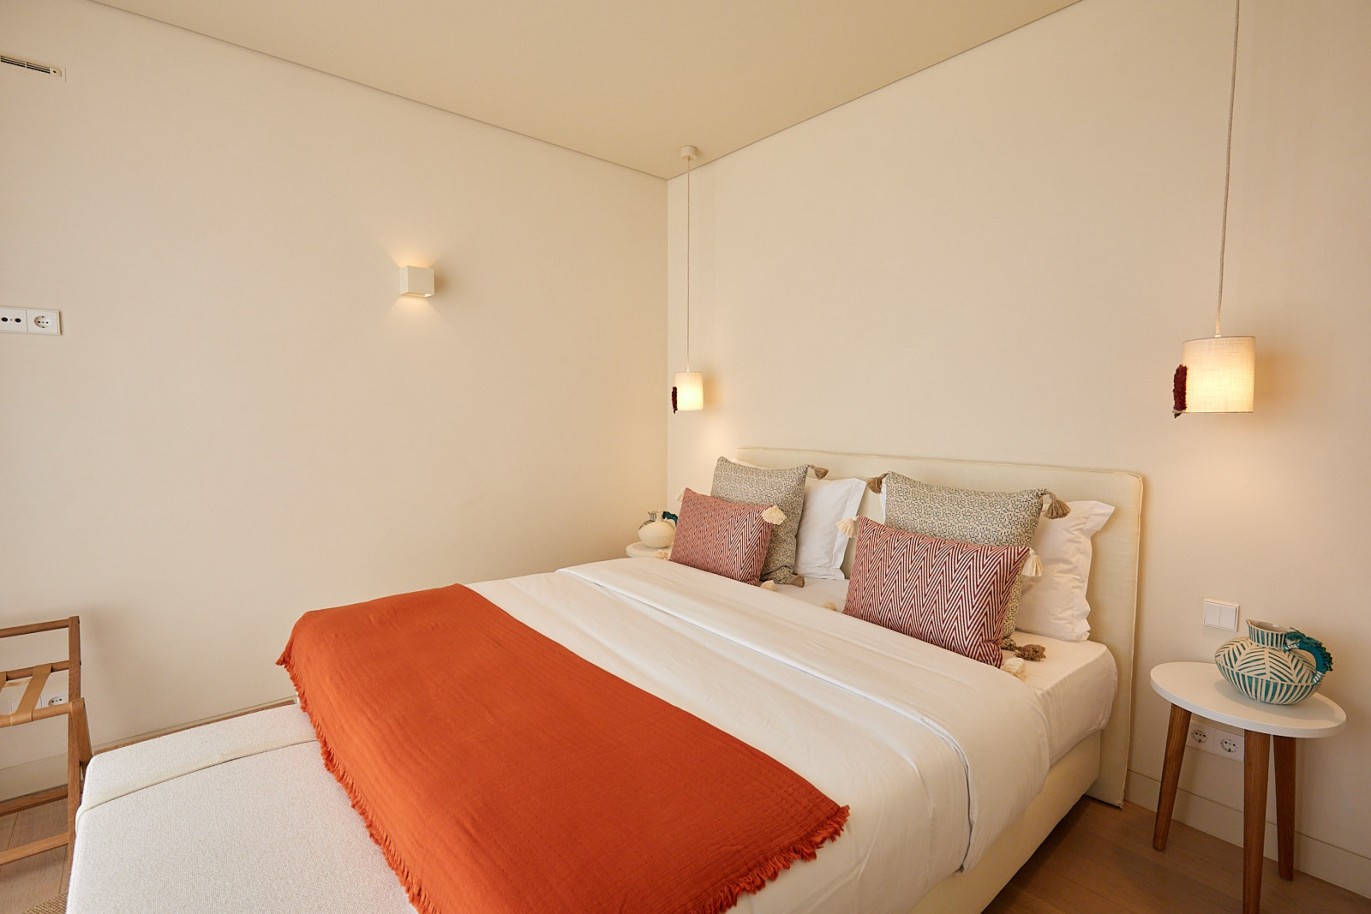 3 bedroom apartment in resort, for sale in Porches, Algarve_228609